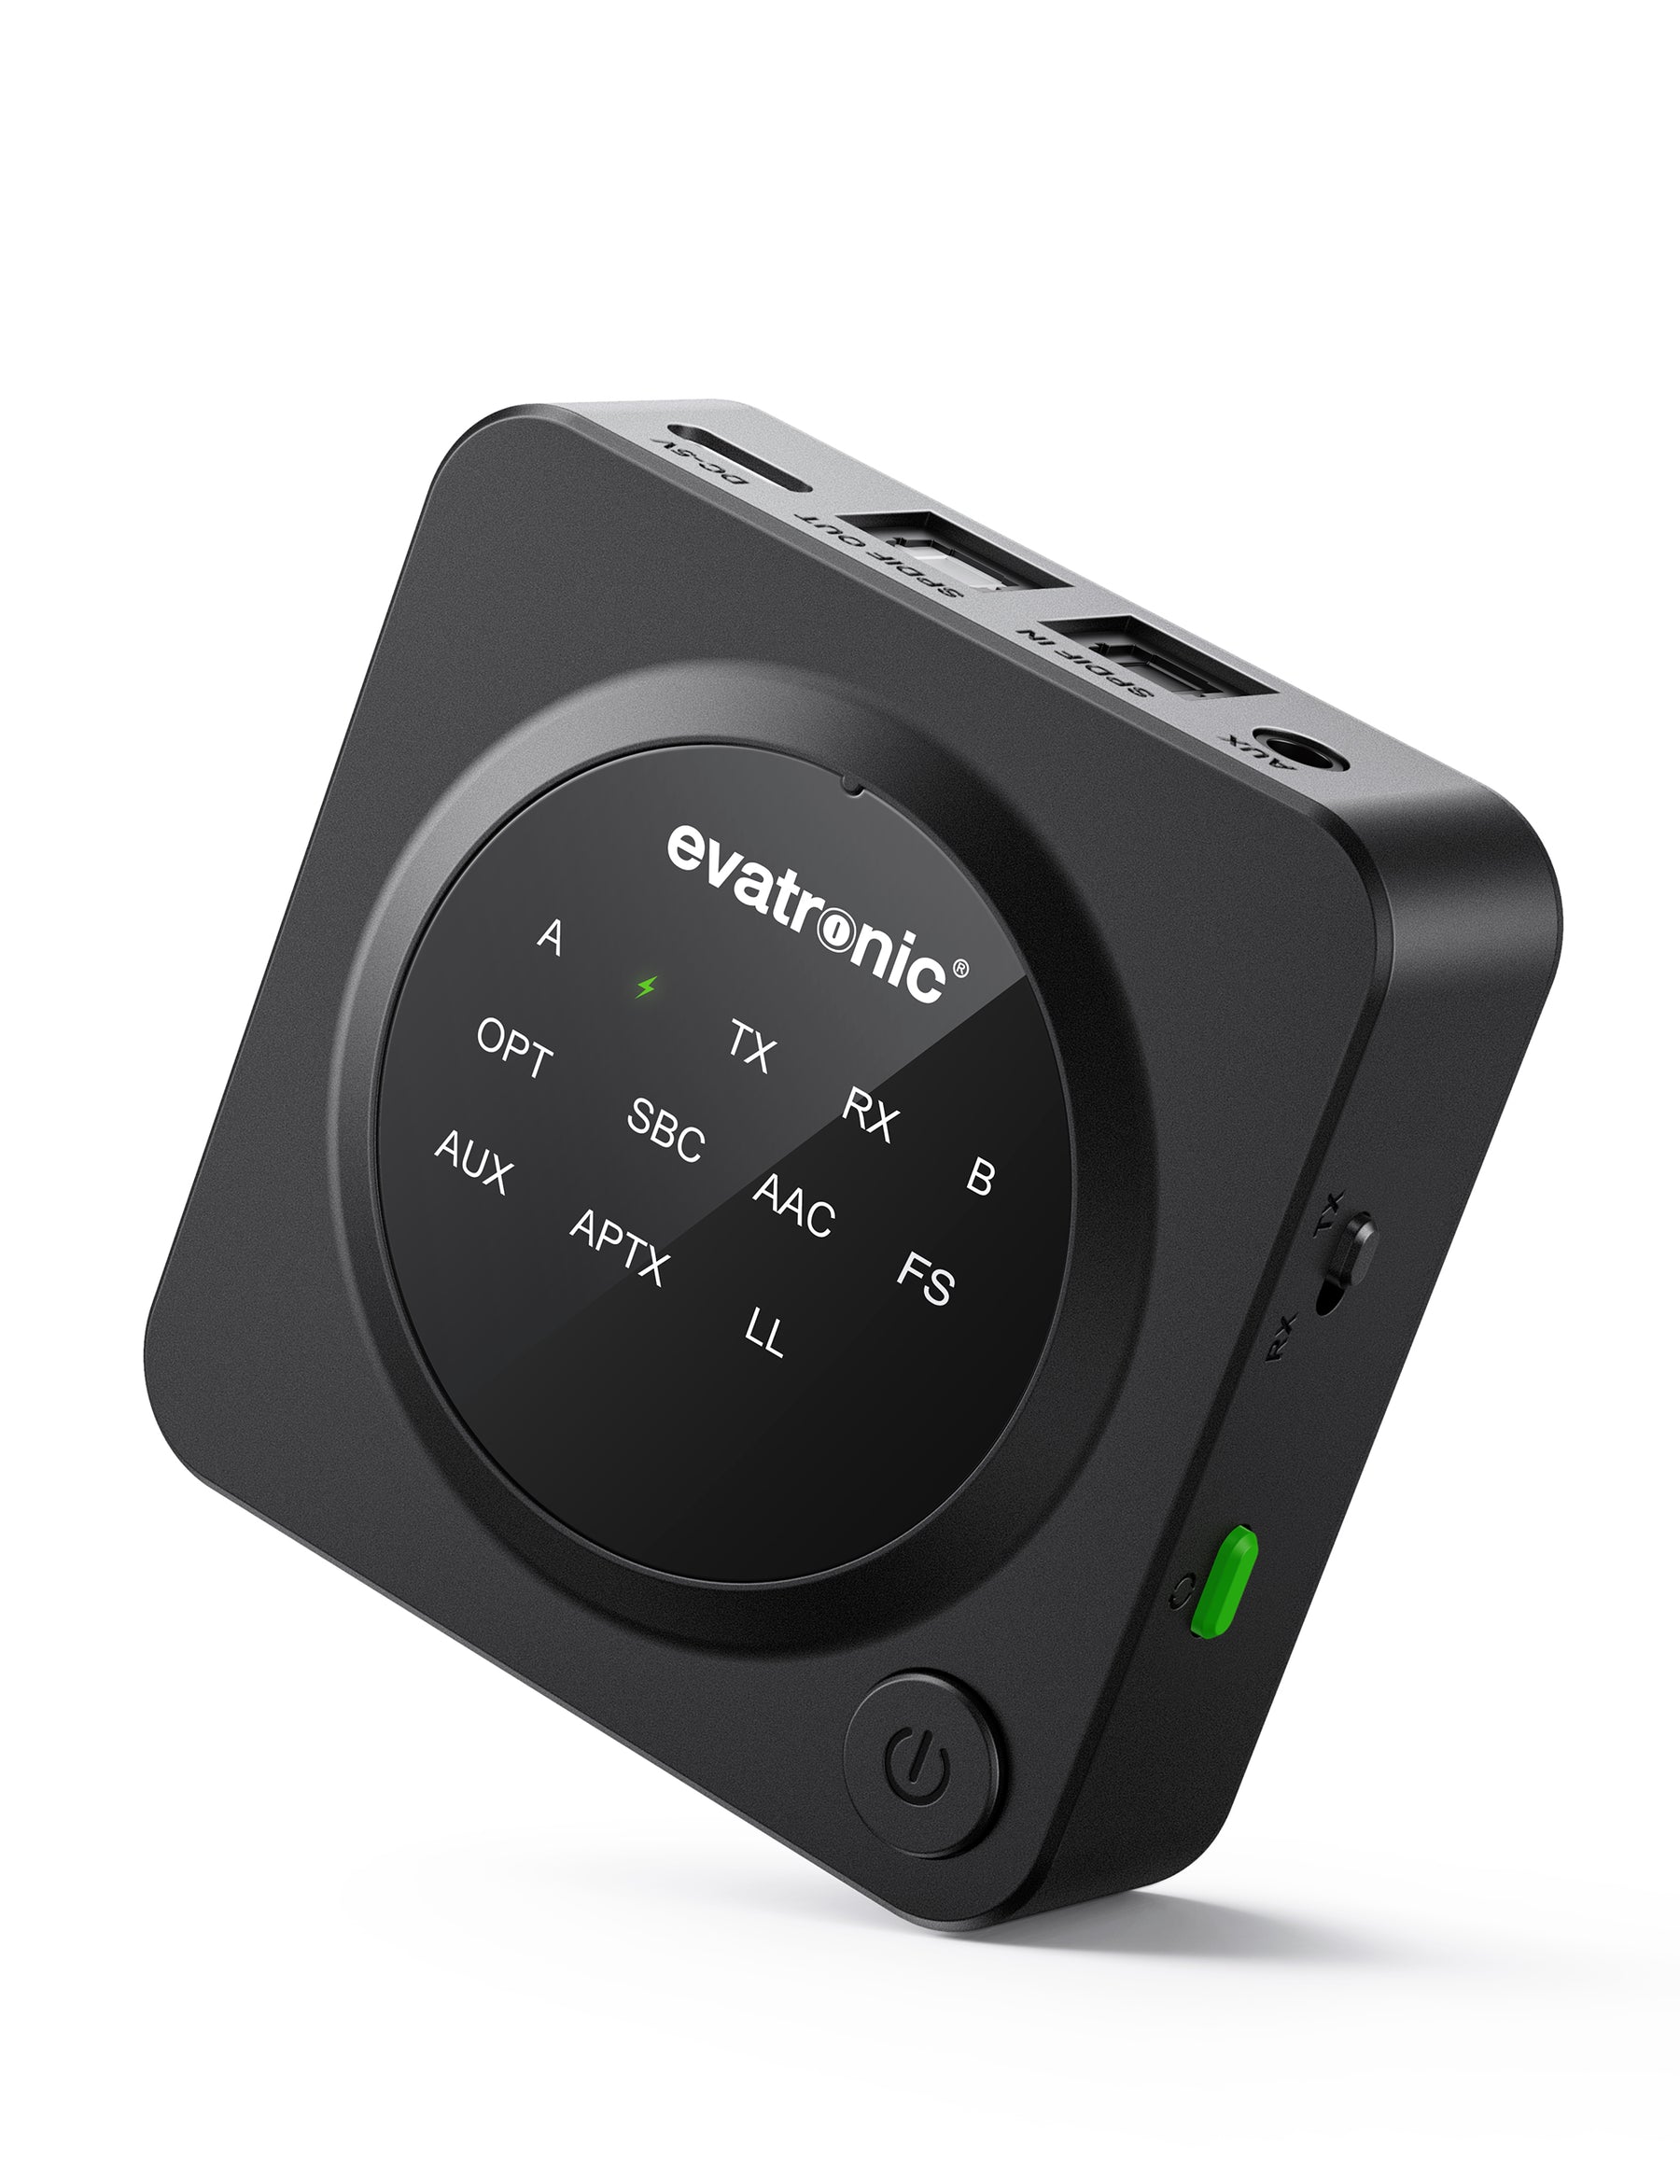  Bluetooth 5.0 Transmitter Receiver for TV, aptX Low